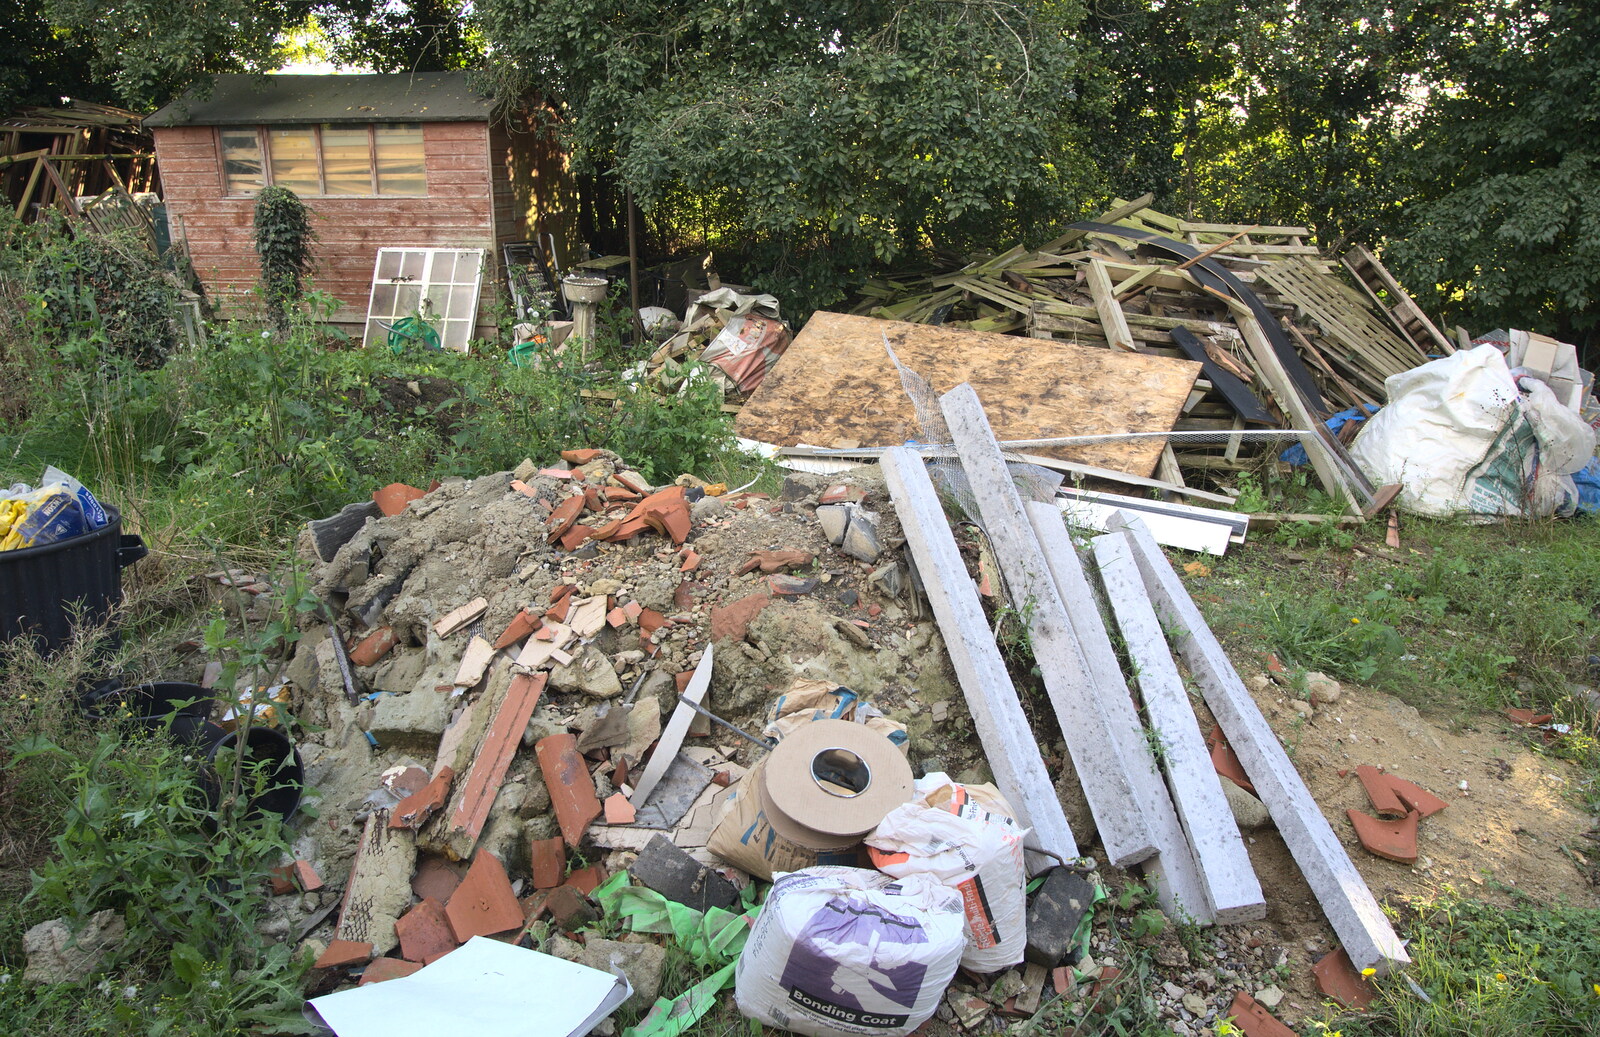 A big pile of crap in the garden from A 1940s Dance, Bressingham Steam Museum, Bressingham, Norfolk - 19th September 2015